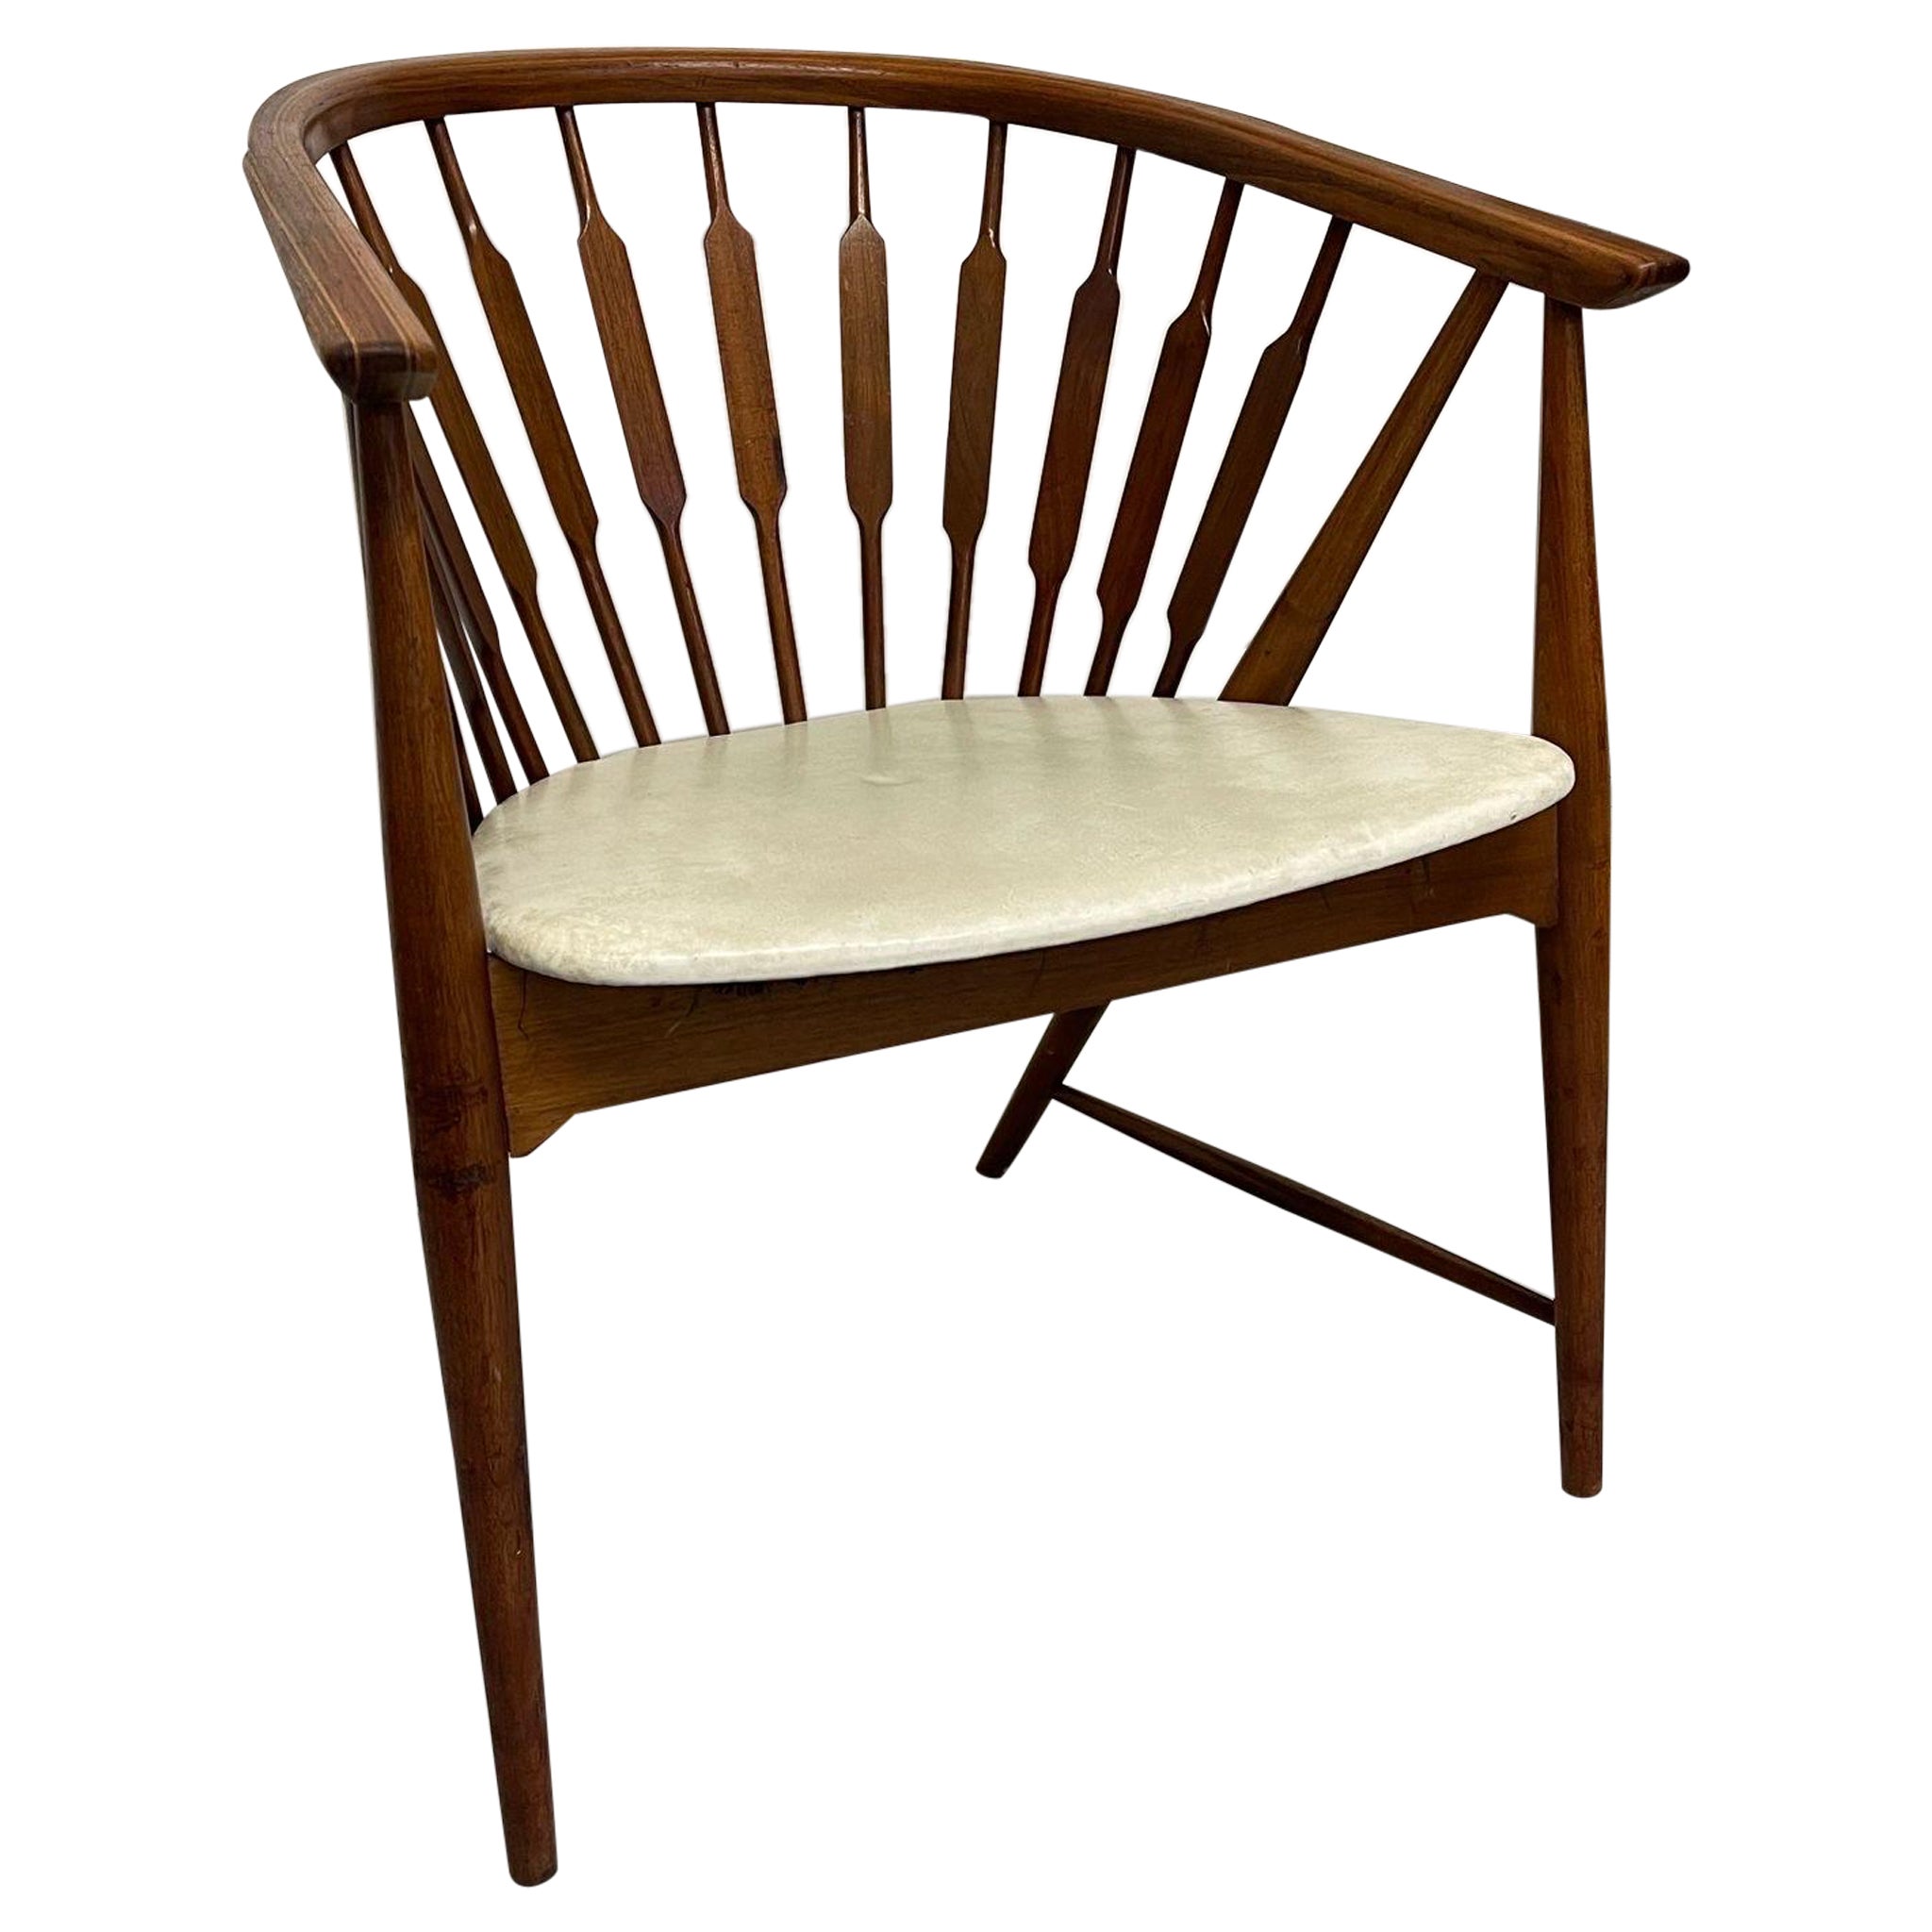 Vintage Mid Century Modern Spindled Drexel Declaration Captain’s Chair.